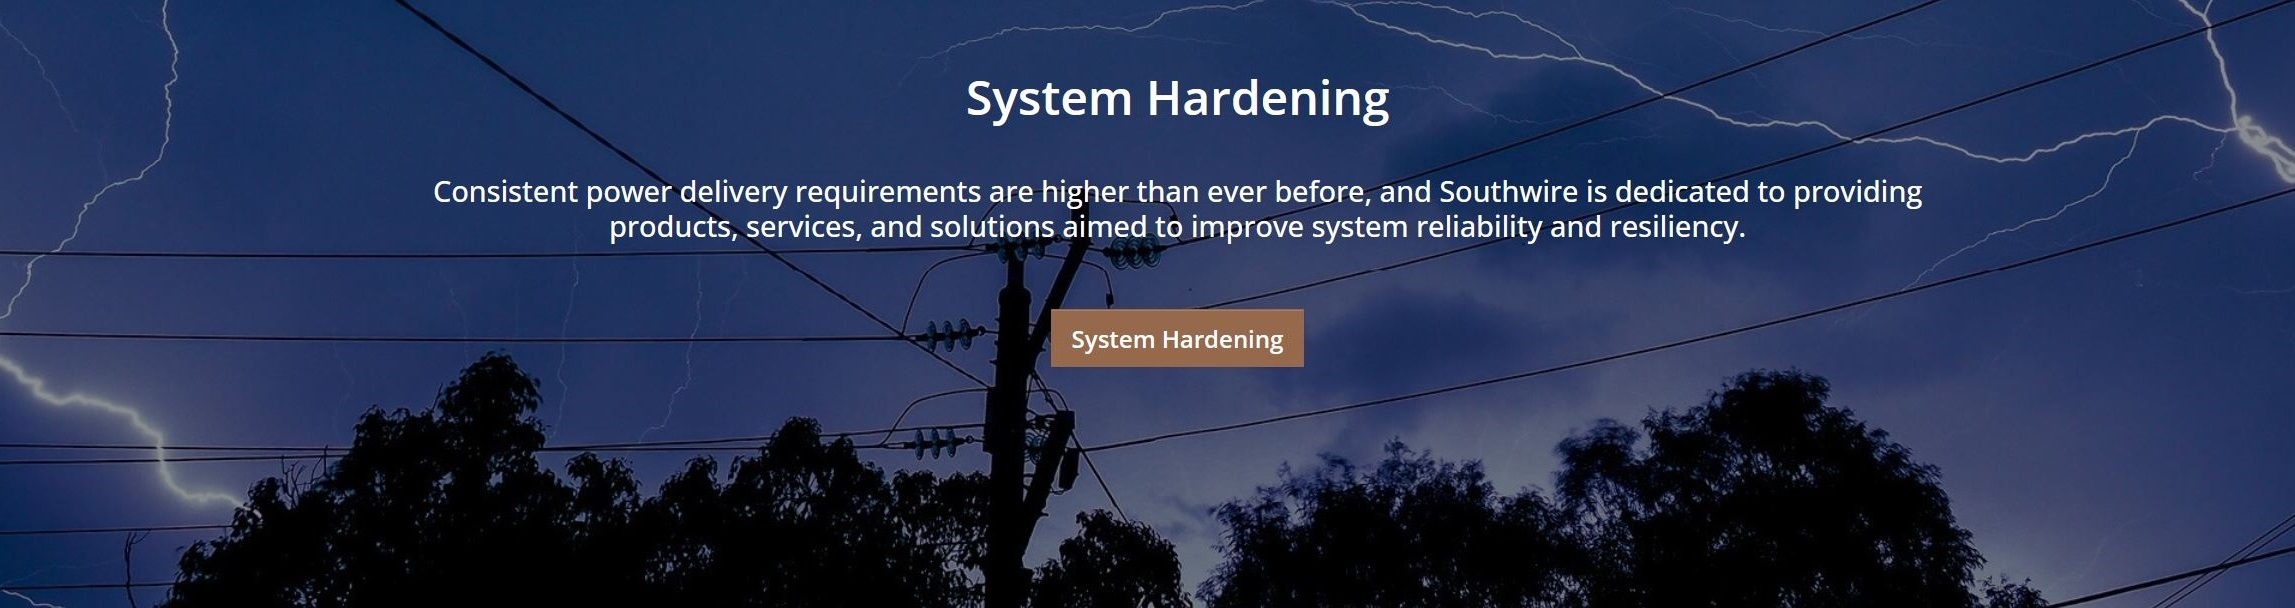 System Hardening